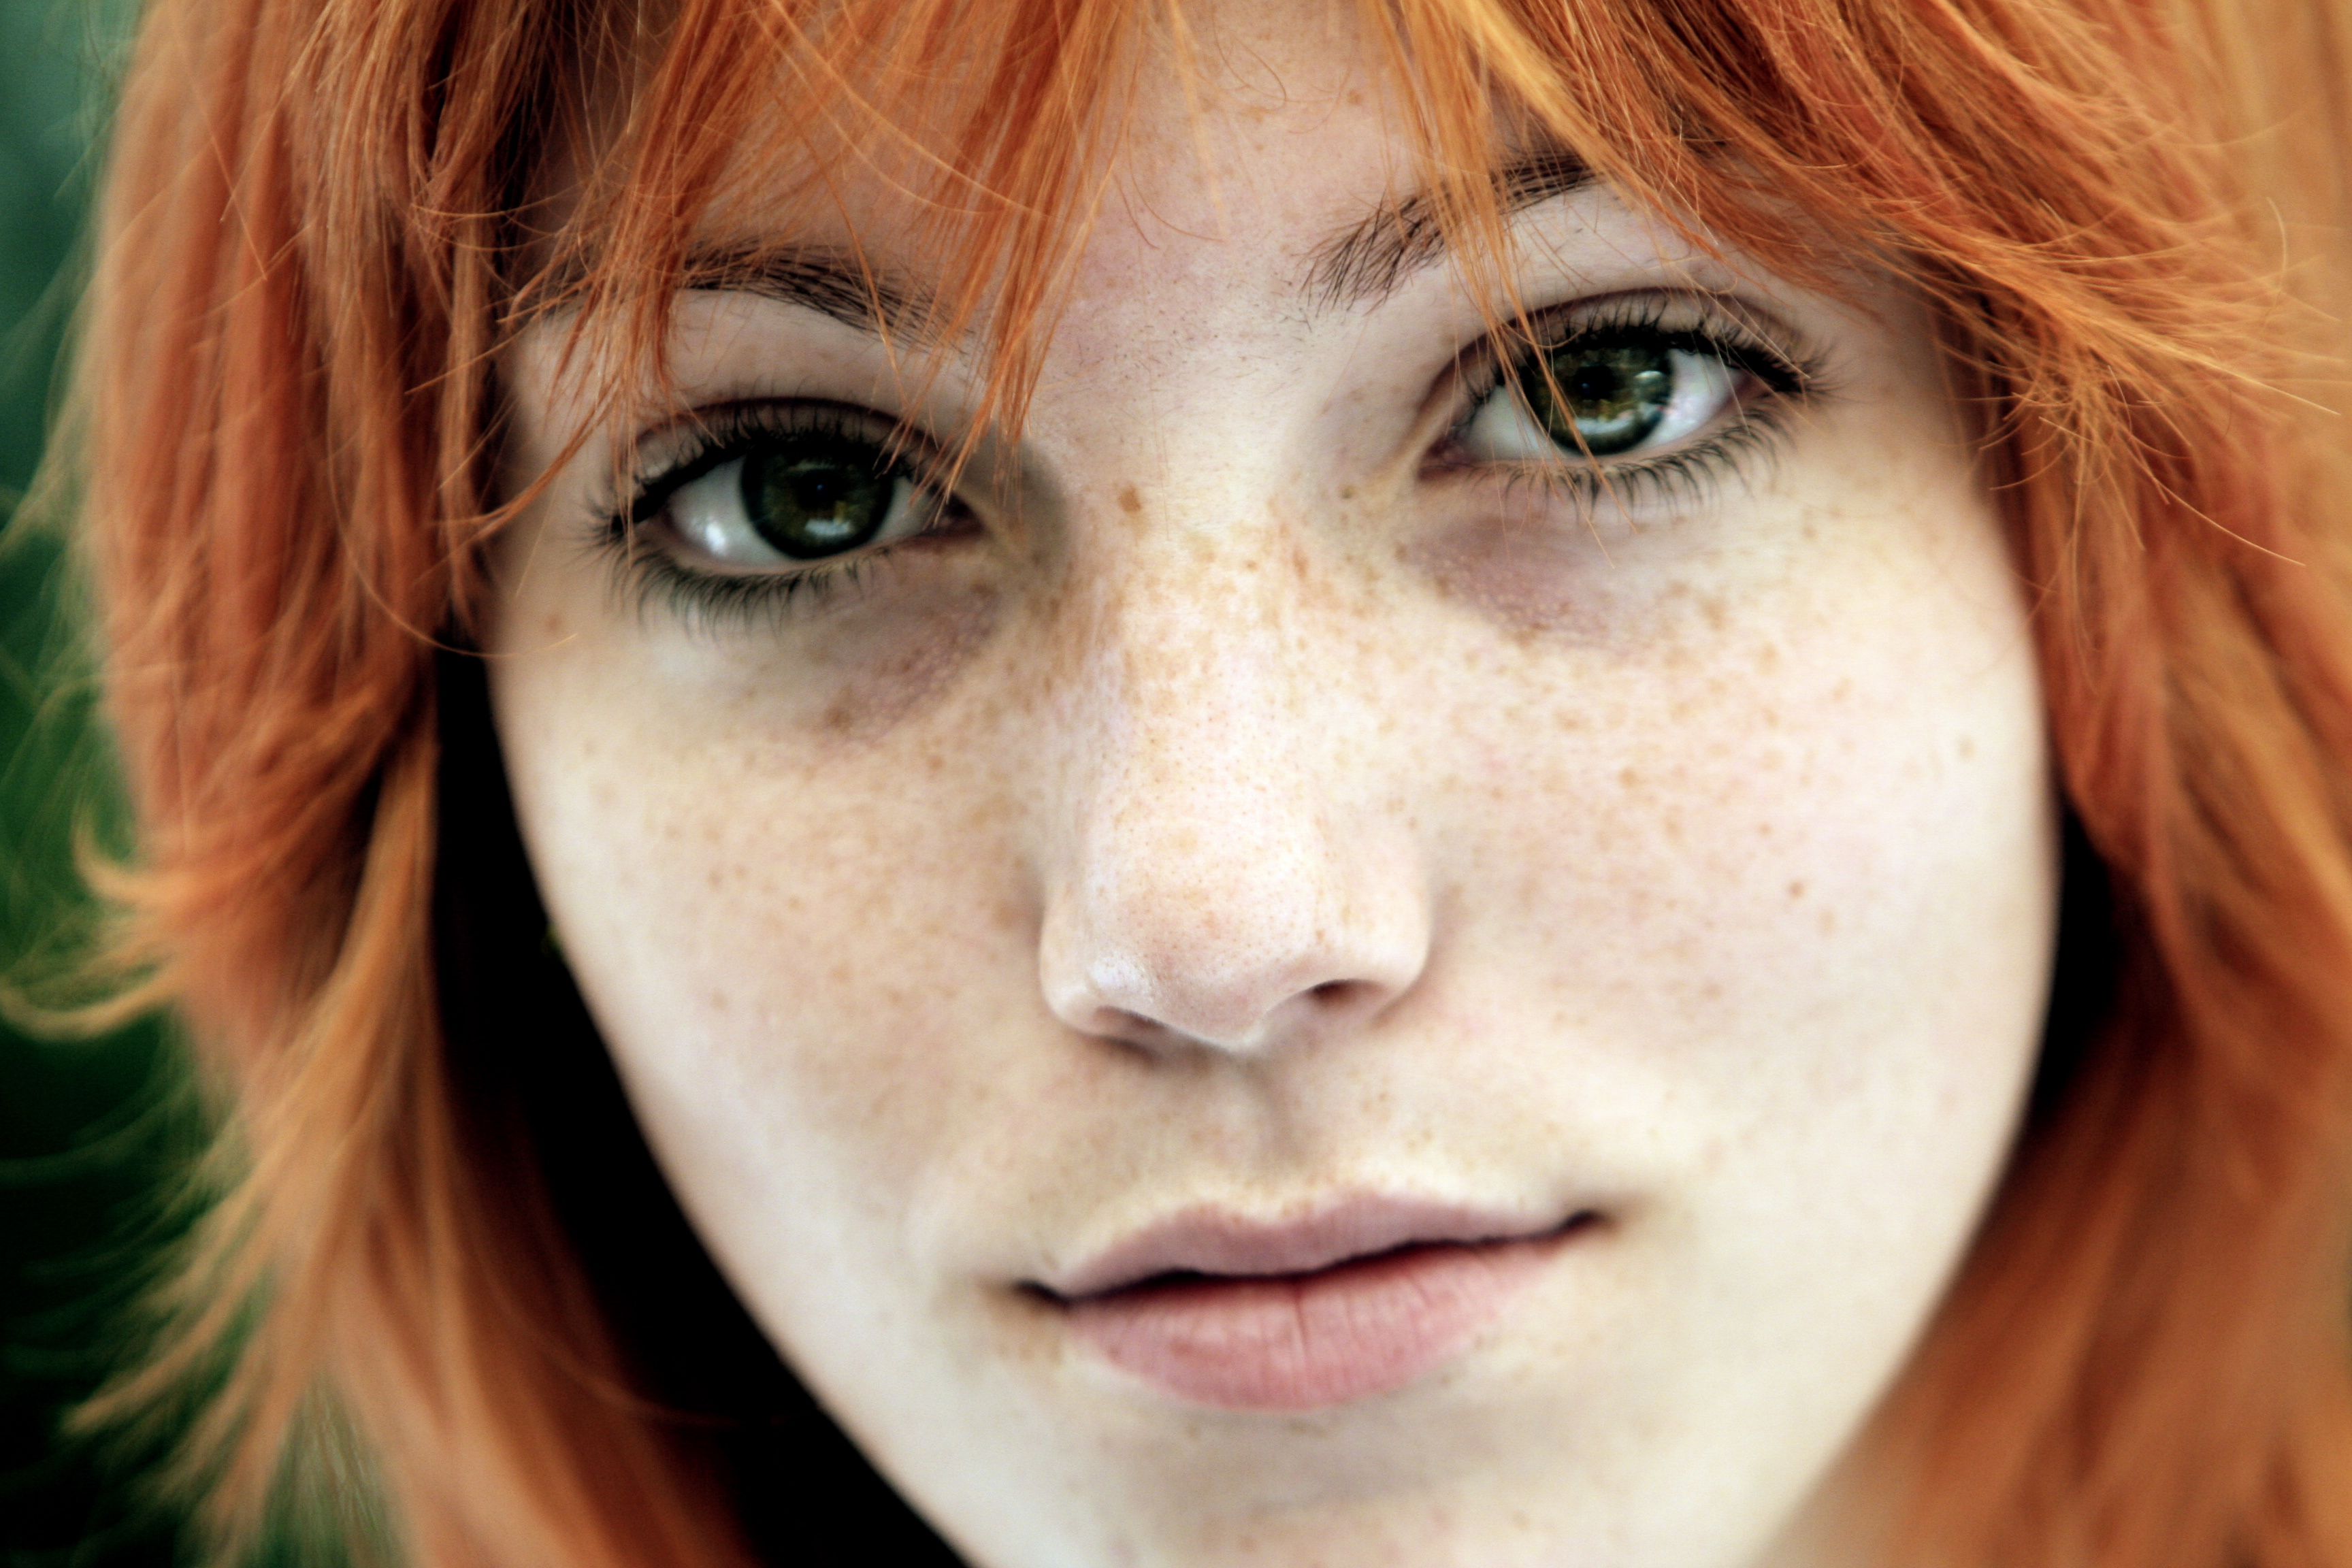 women, redheads, freckles, green eyes, faces - desktop wallpaper